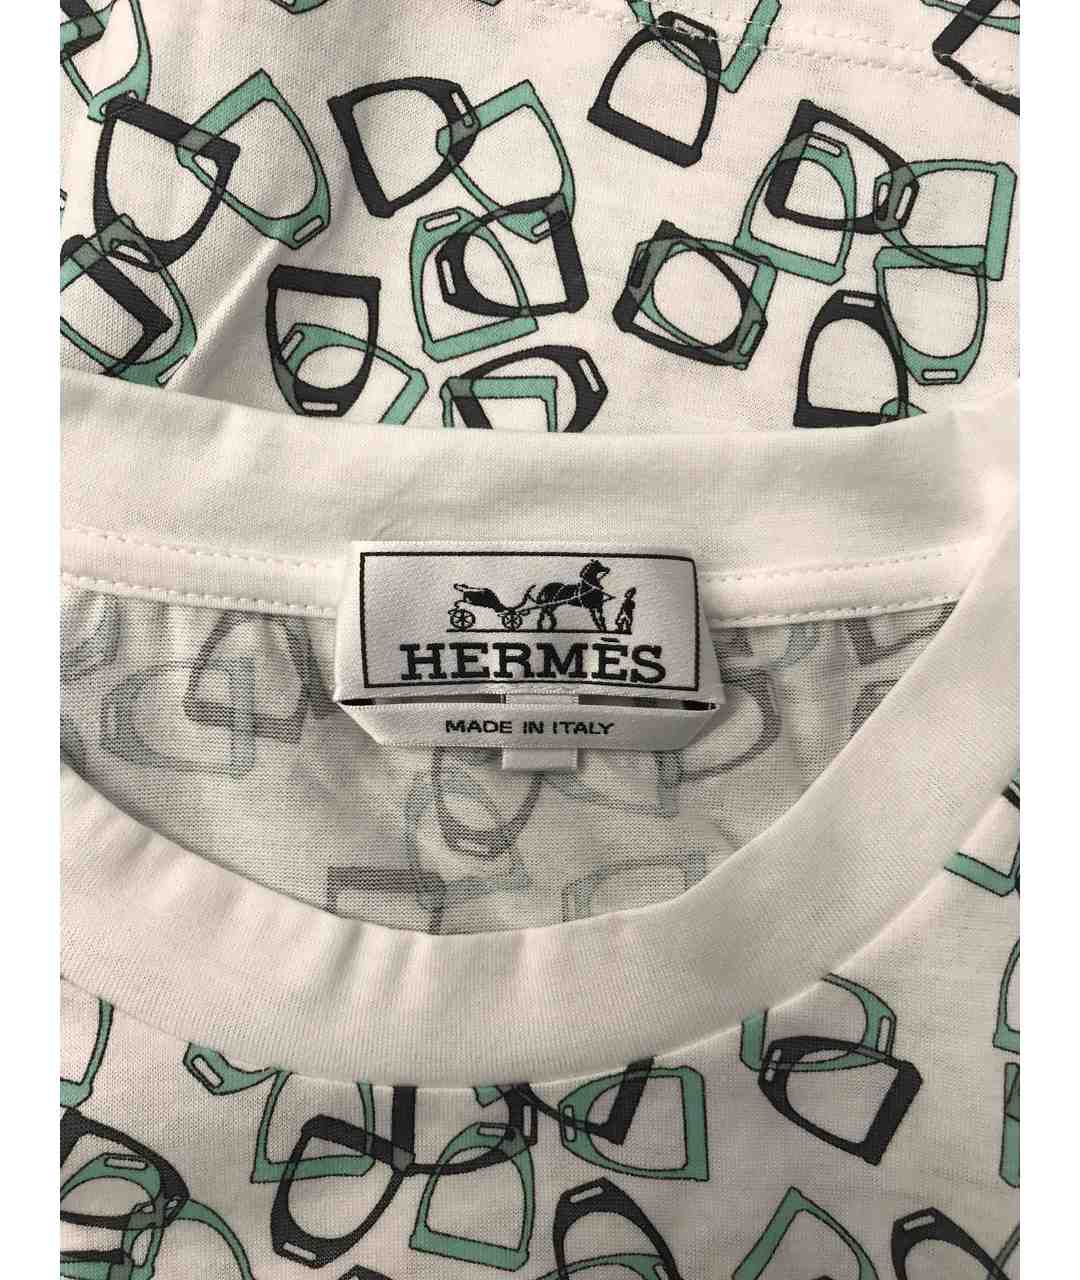 HERMES PRE-OWNED Хлопковая футболка, фото 3